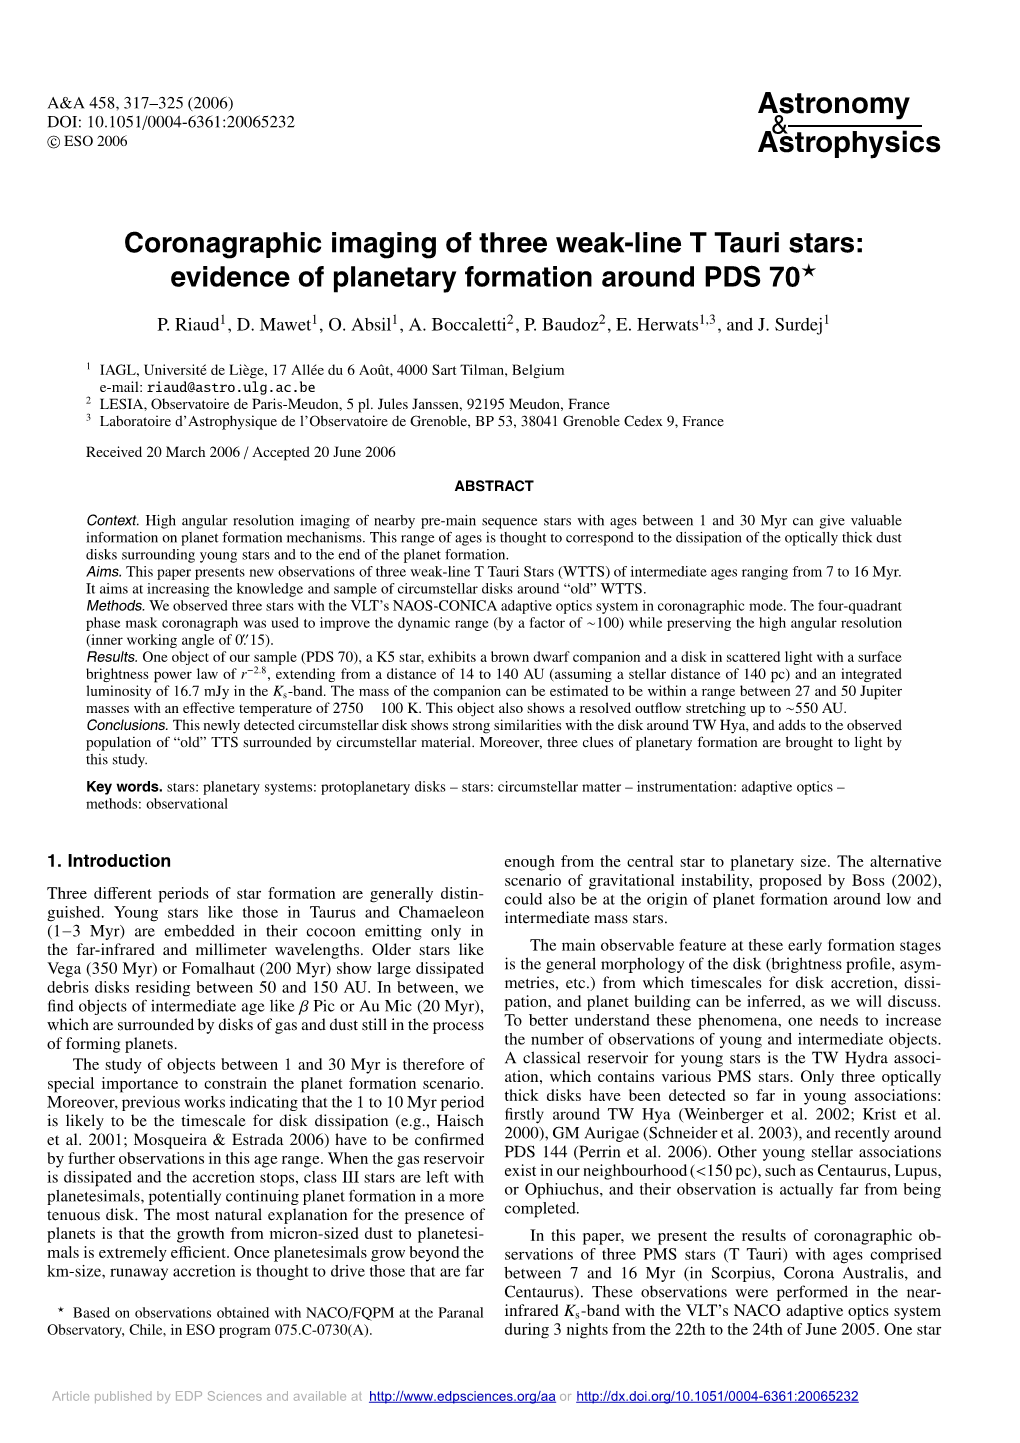 Coronagraphic Imaging of Three Weak-Line T Tauri Stars: Evidence of Planetary Formation Around PDS 70